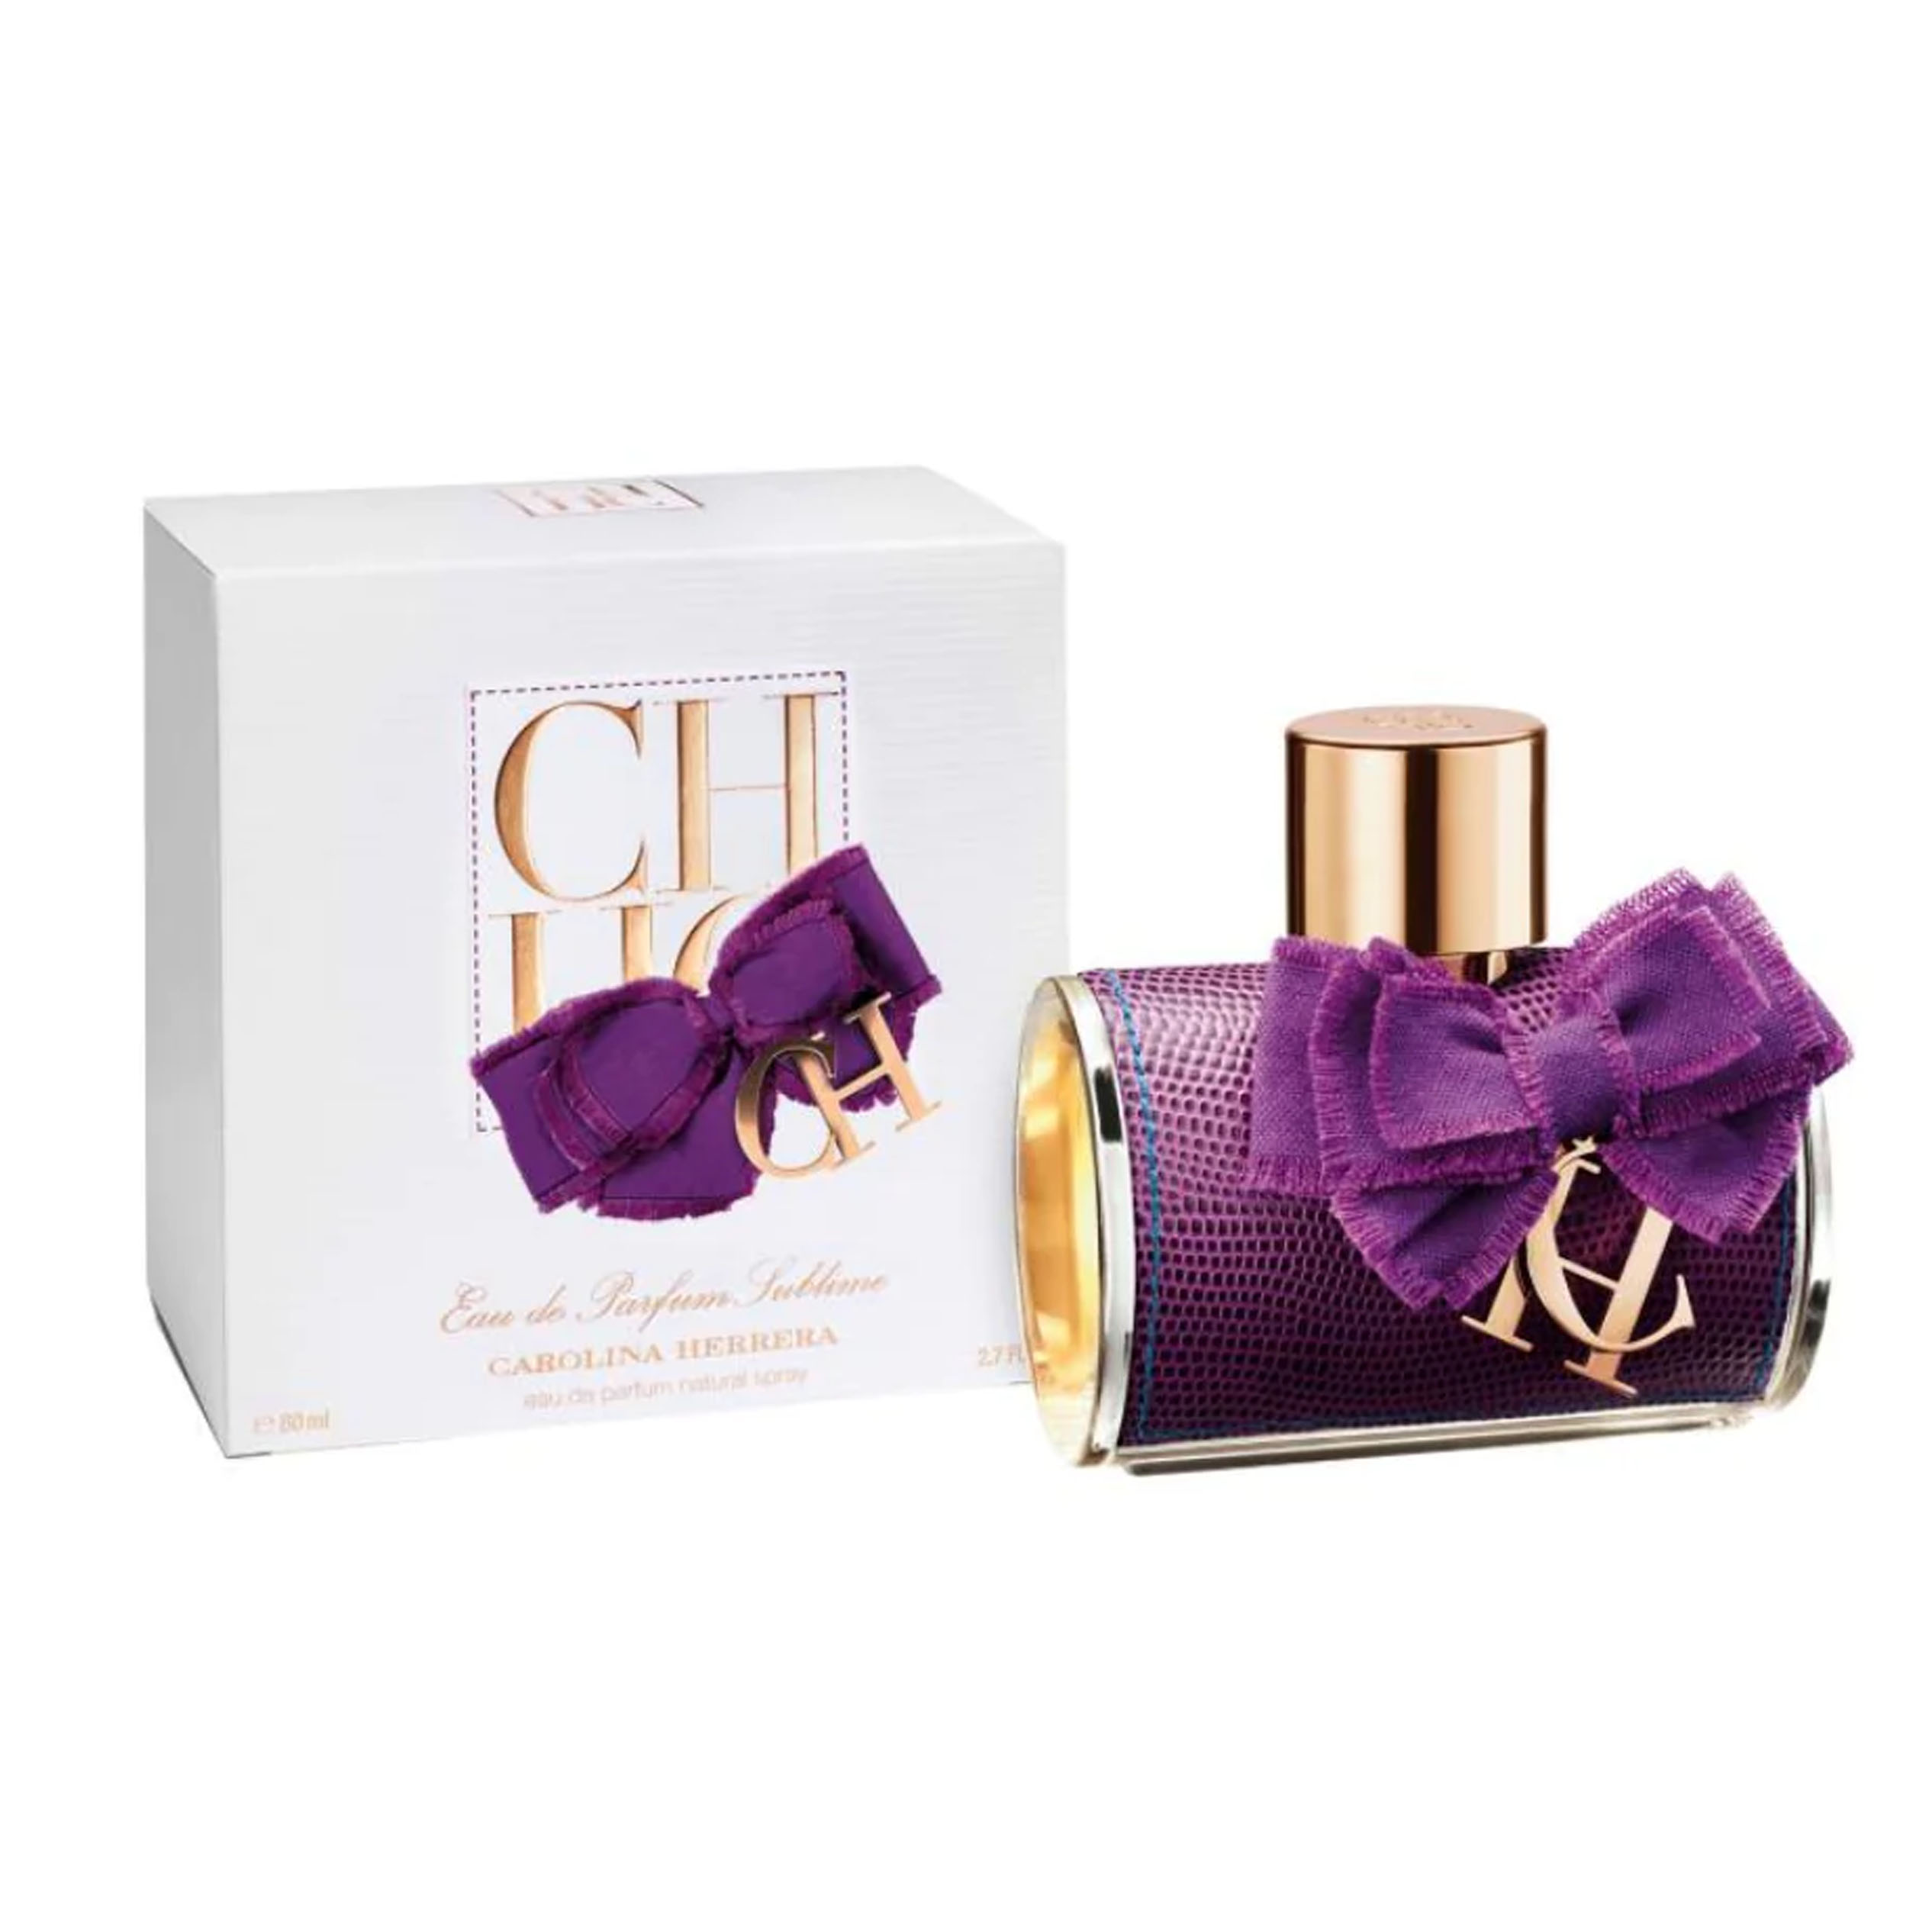 Perfume Ch Eau De Parfum Sublime Carolina Herrera  (Replica Con Fragancia Importada)- Mujer (1)